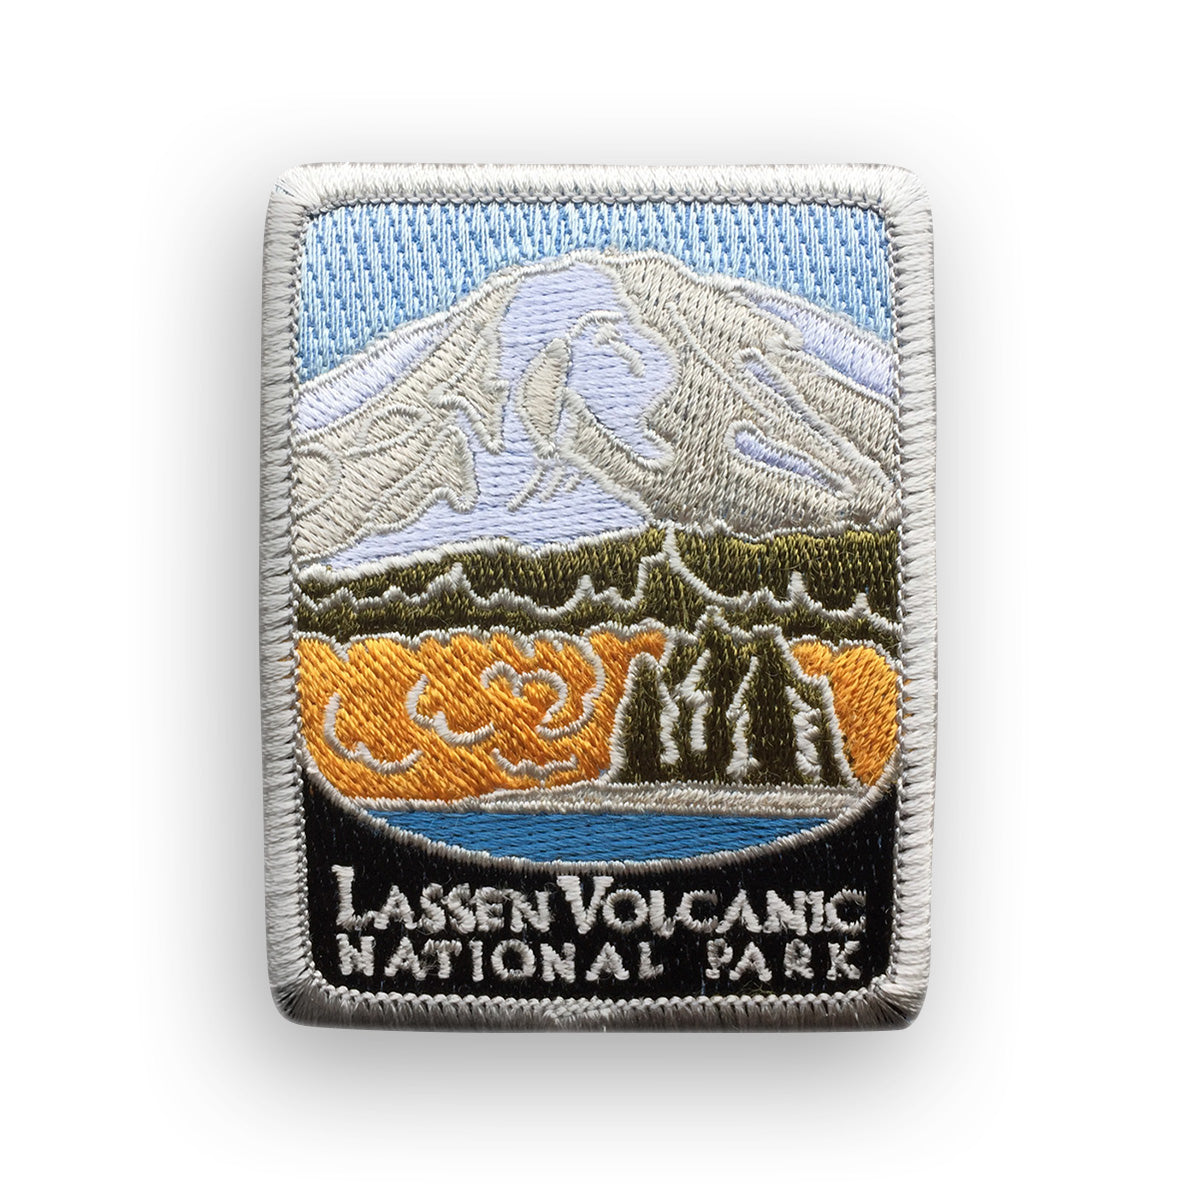 Lassen Volcanic National Park Traveler Patch